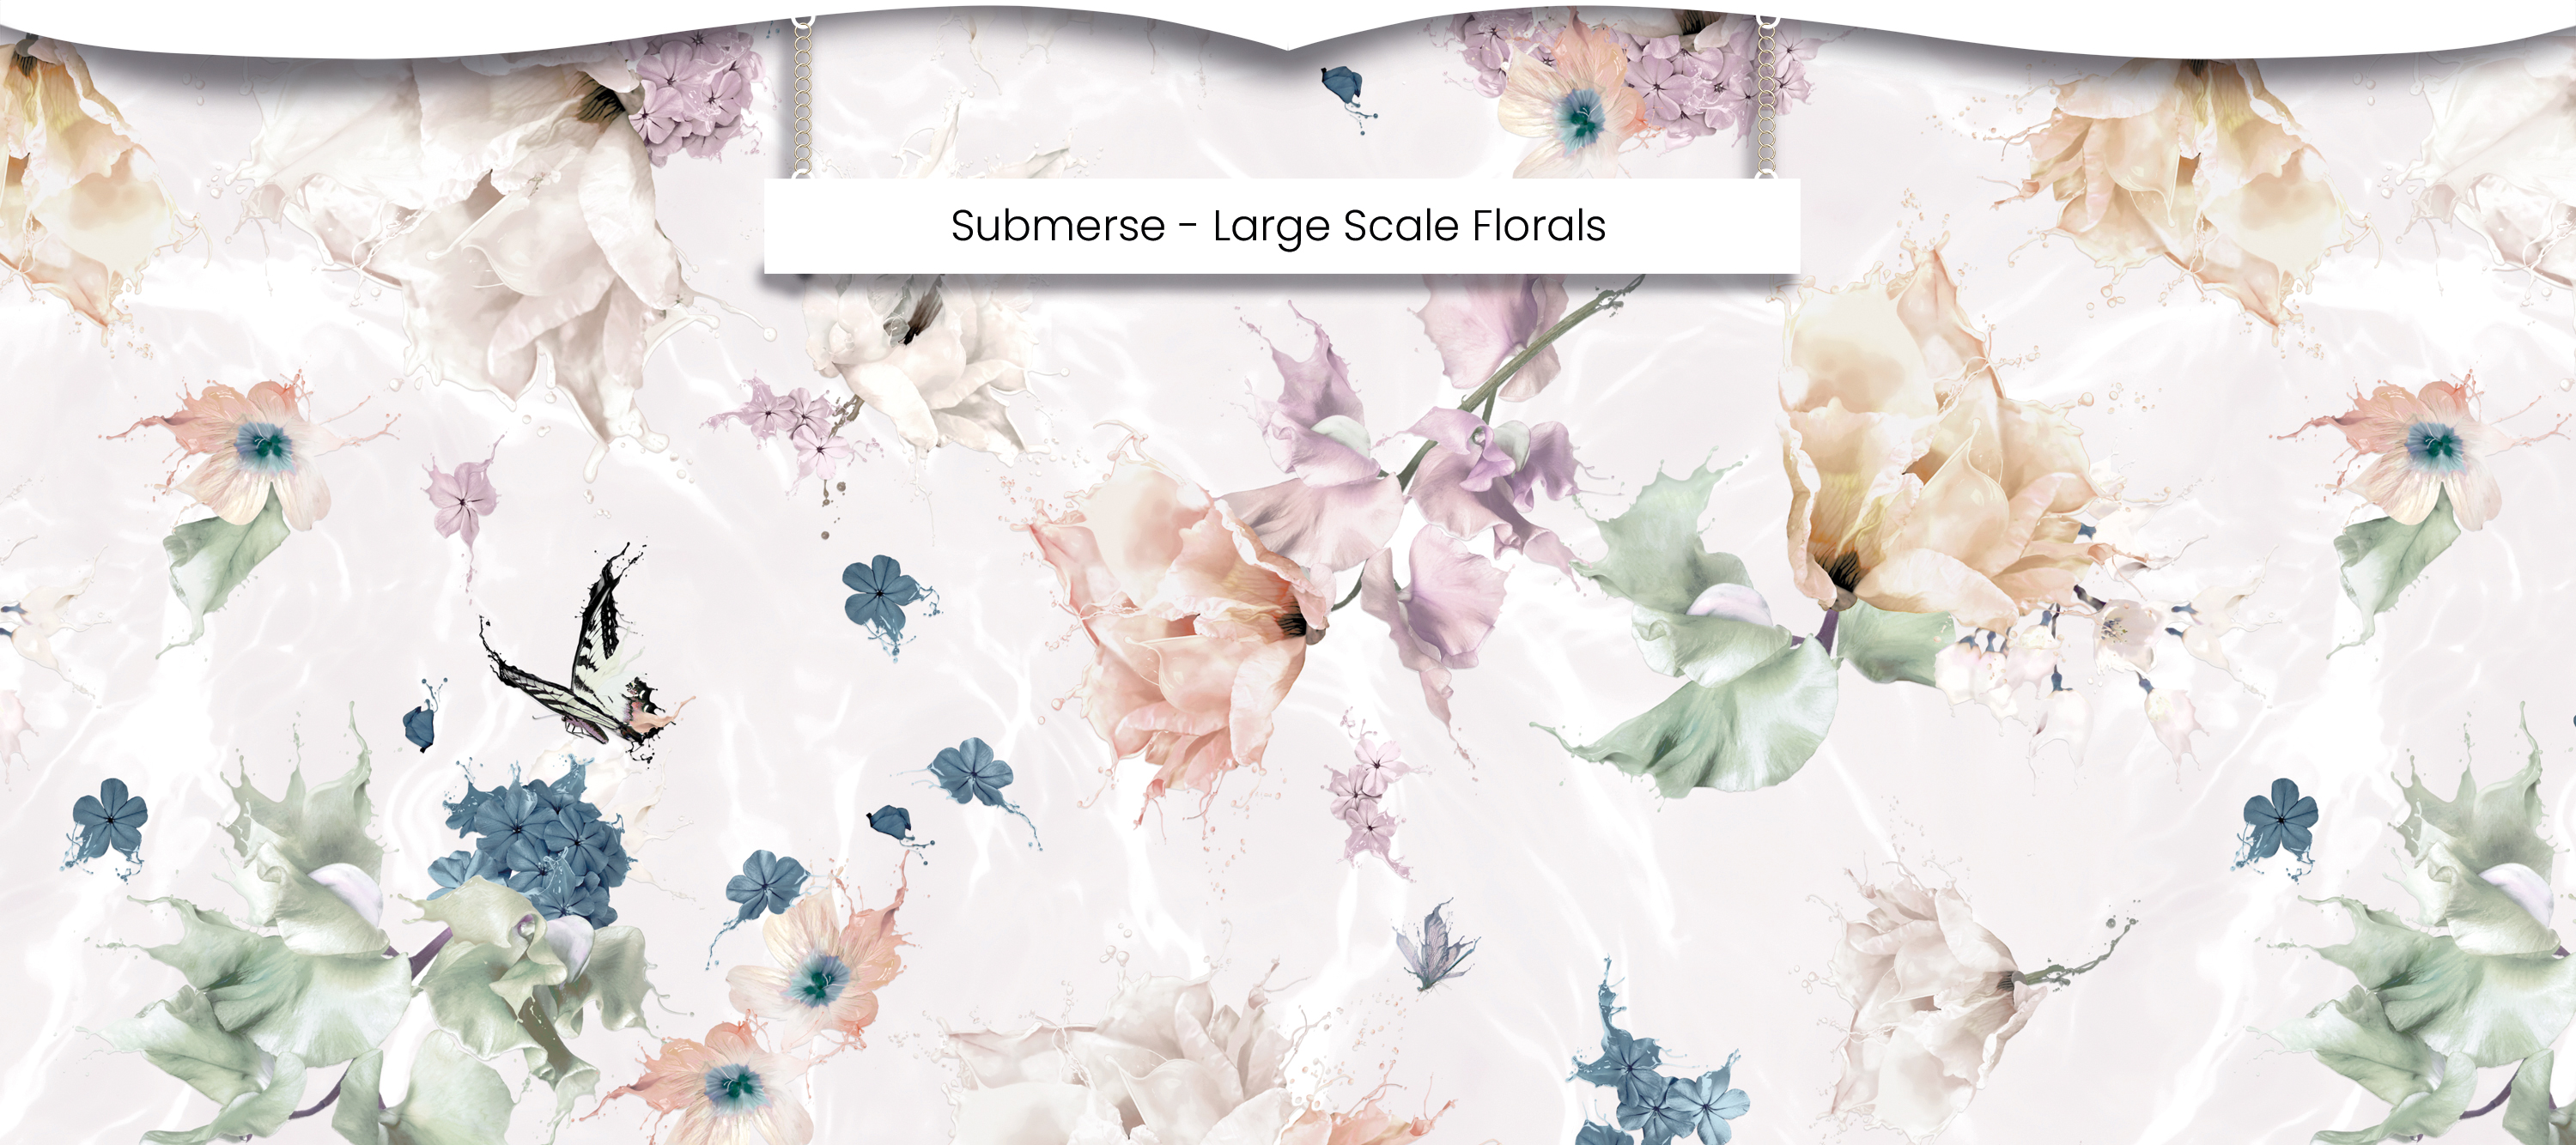 Large Scale Floral wallpaper butterflies